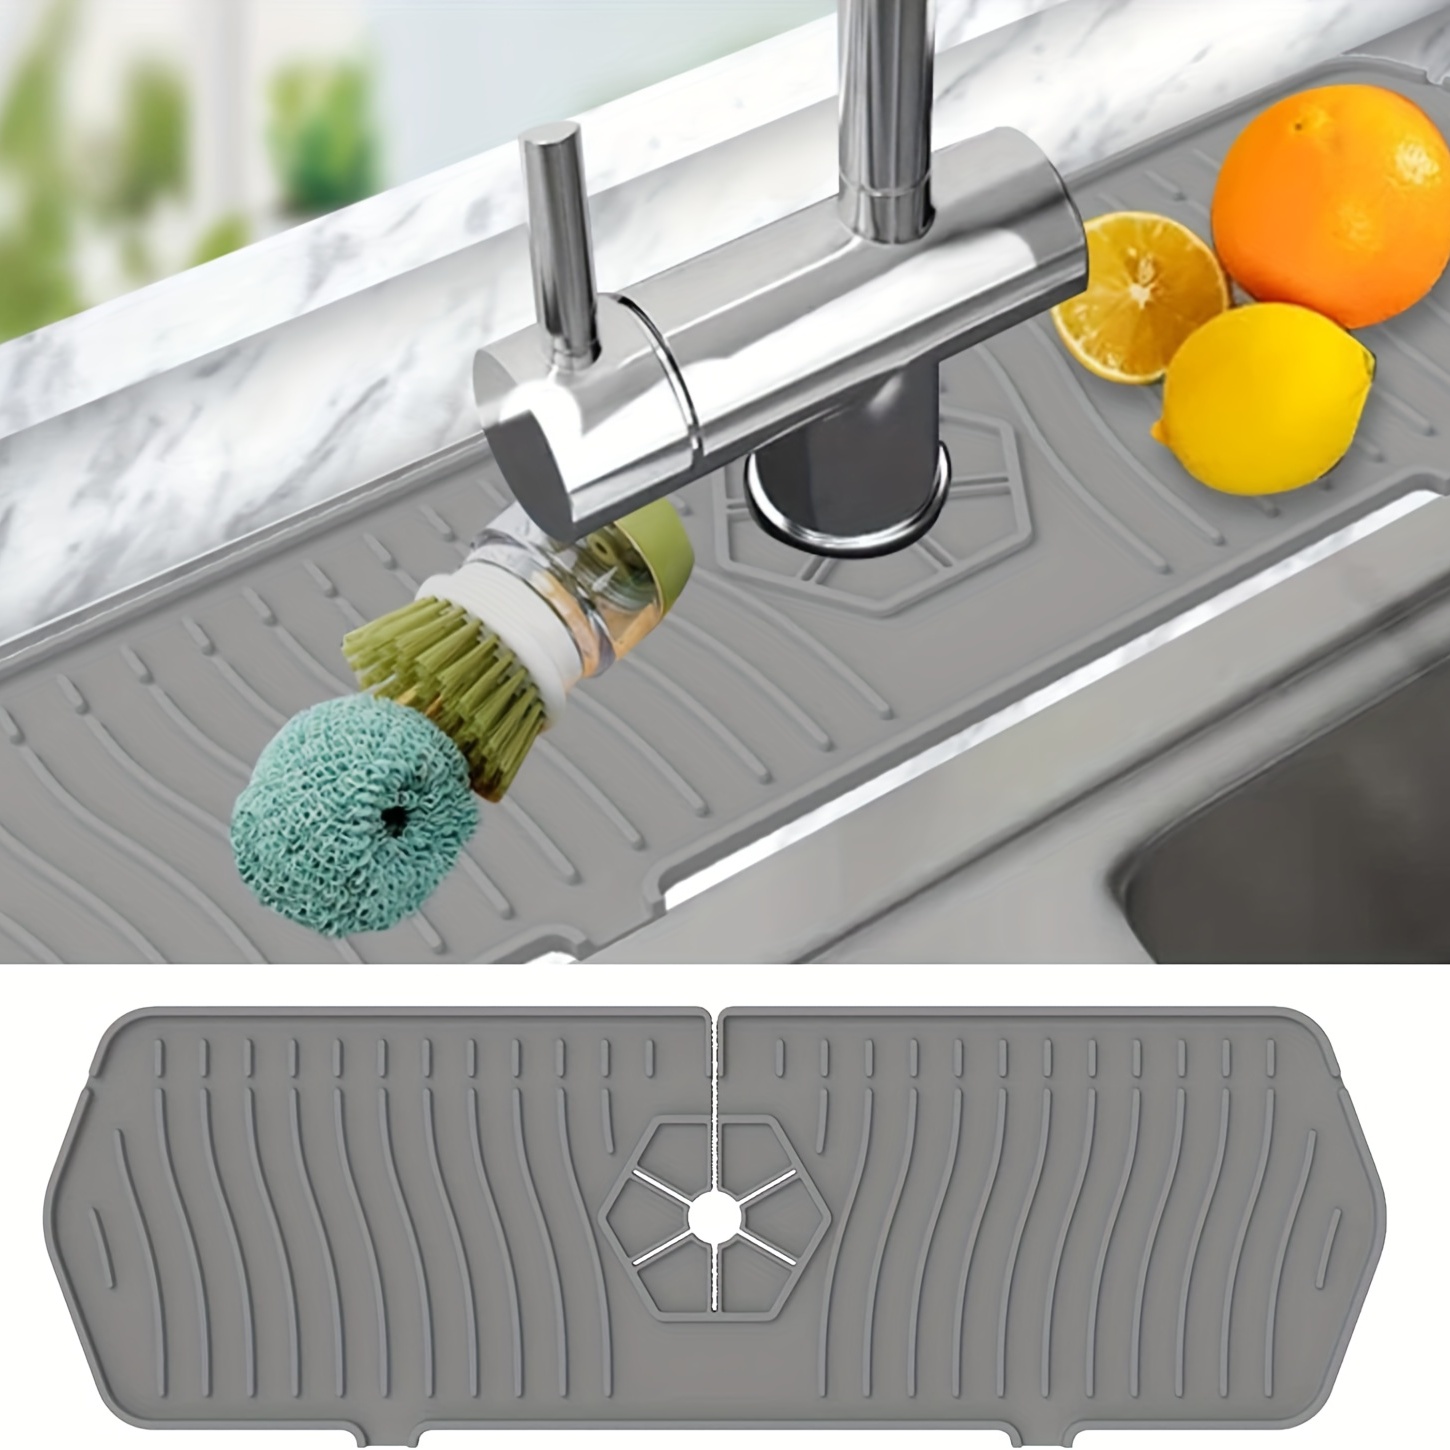 24 inch Faucet Sink Splash Guard Mat,Silicone Kitchen Faucet Mat,Faucet  Drying Mat, Silicone Sink Faucet Mat Splash Guard, Silicone Faucet Water